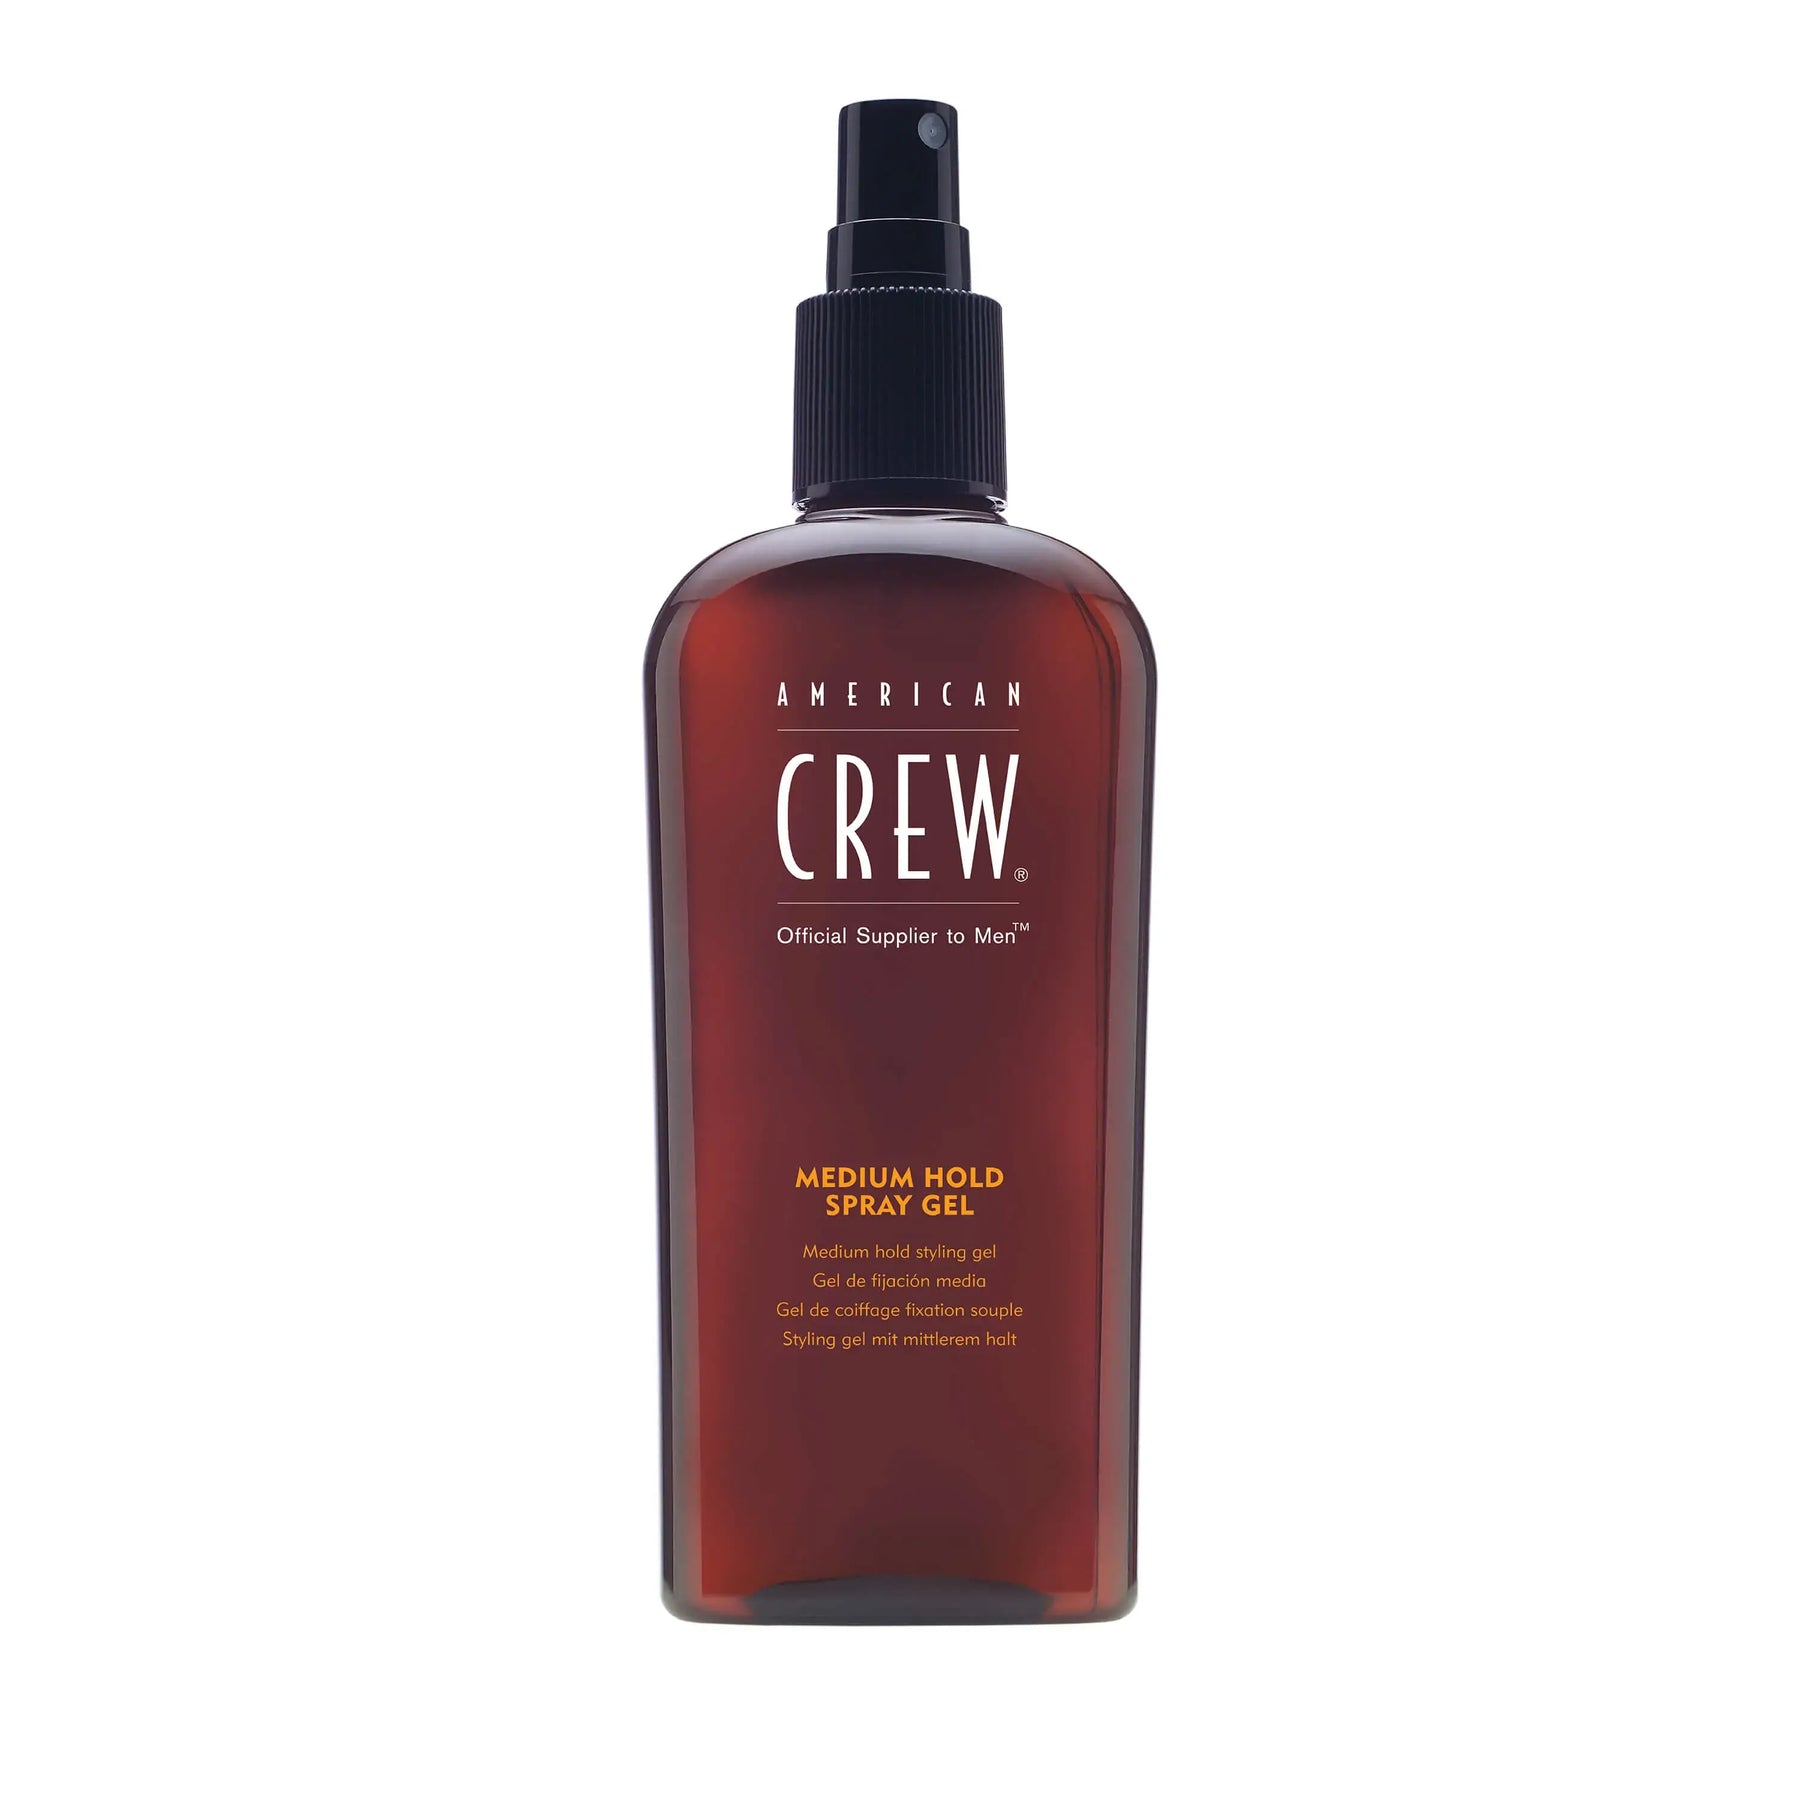 Medium Hold Spray Hair Gel Crew - American